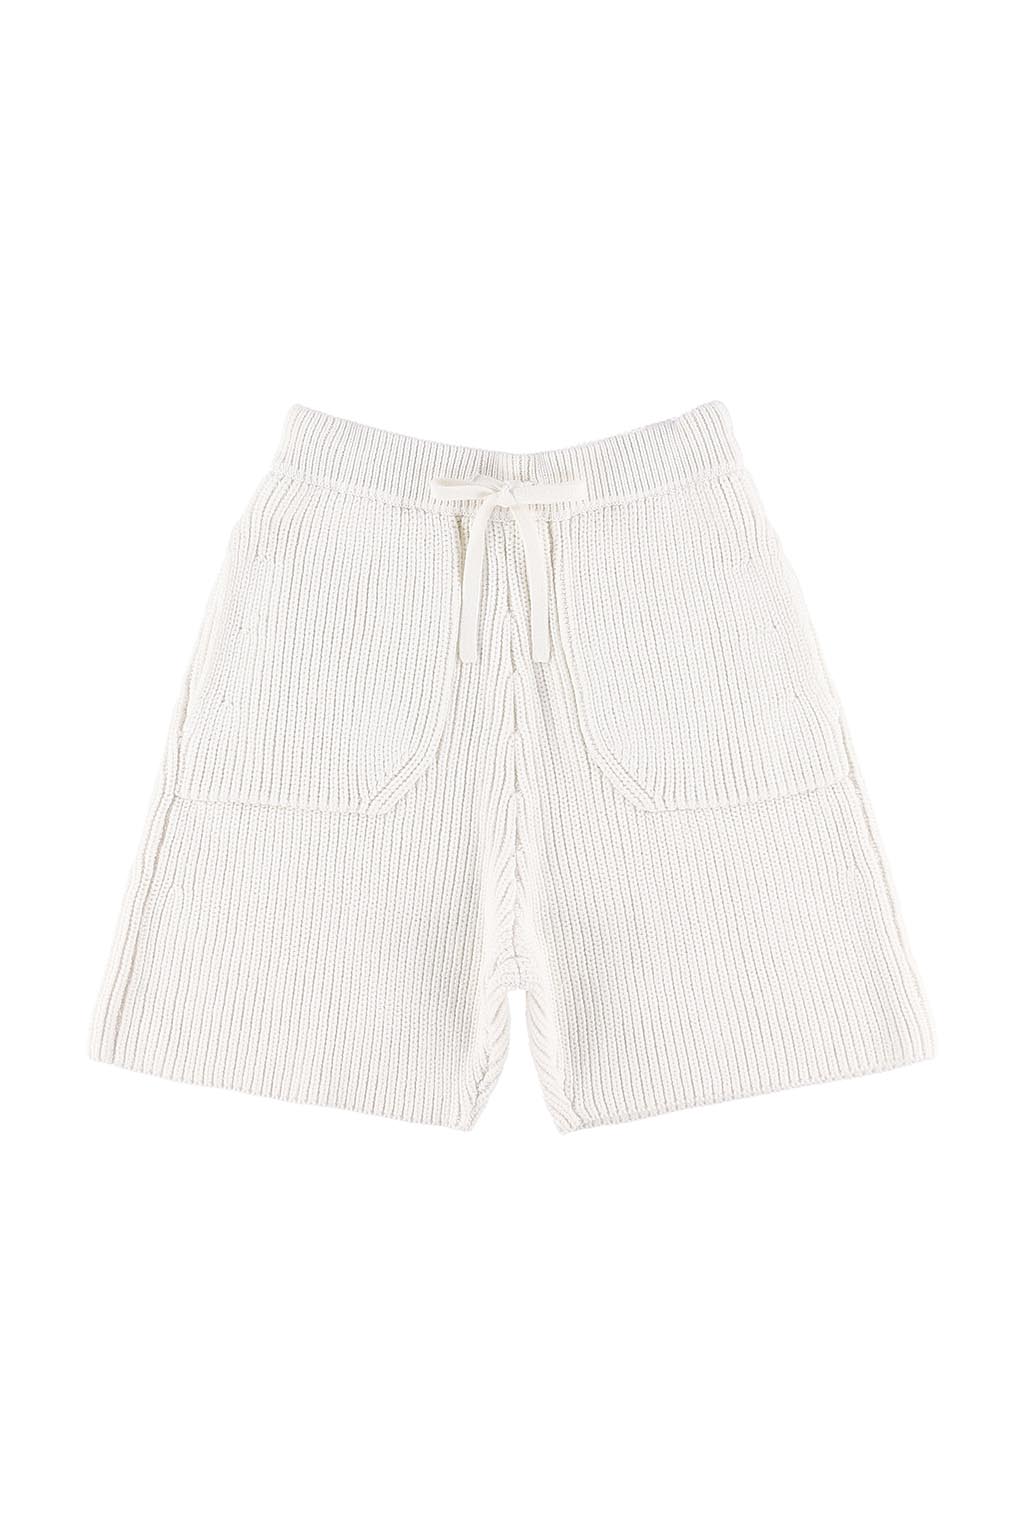 knit-short-pants-white-02